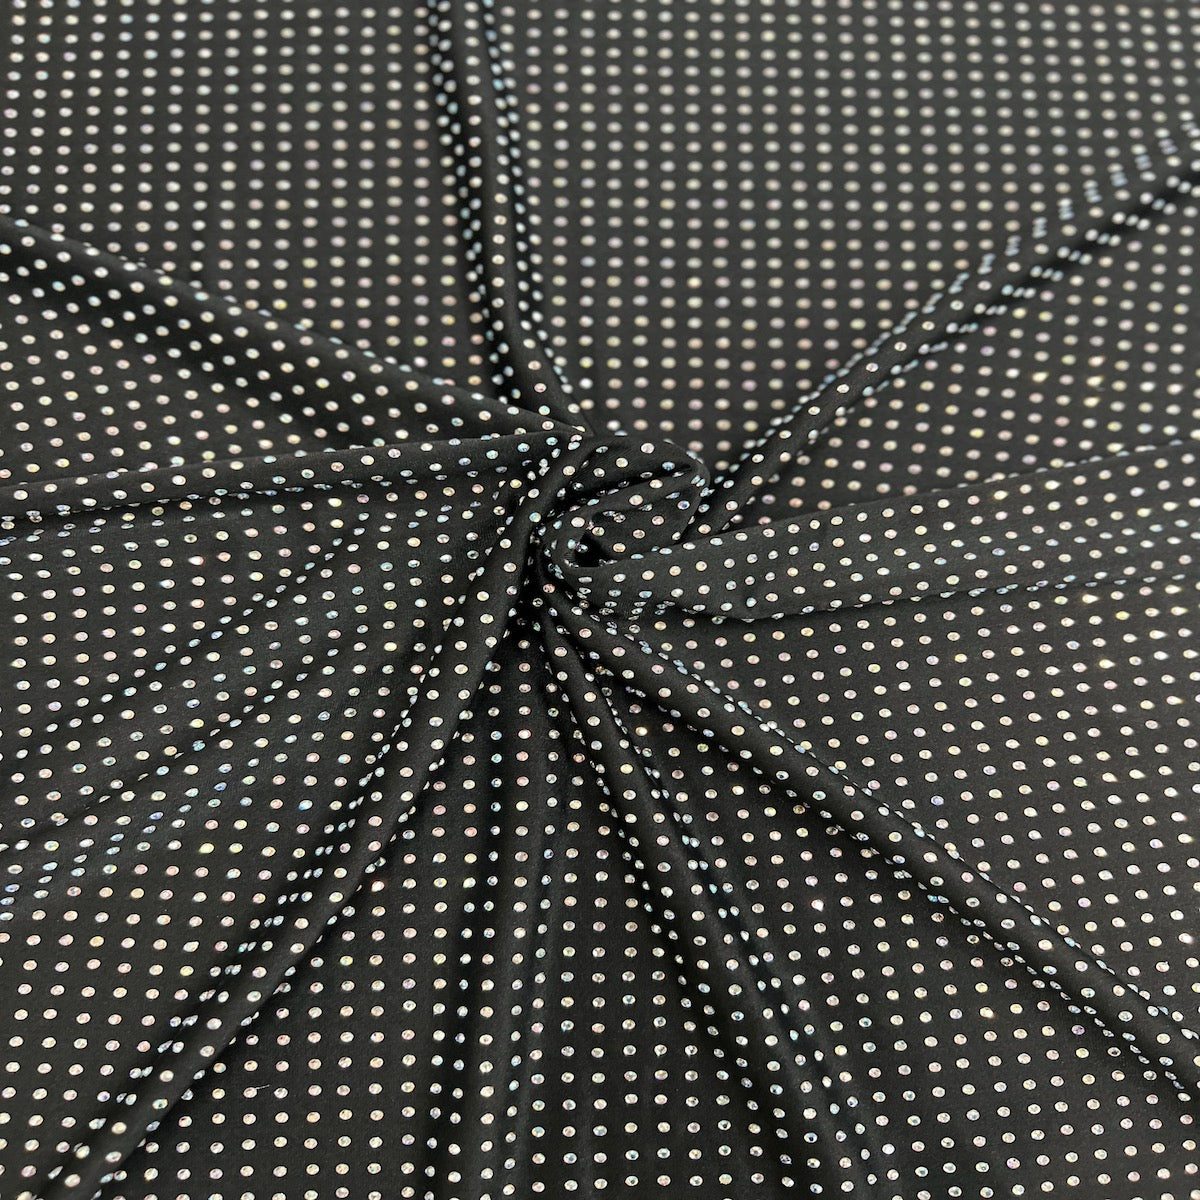 Black Iridescent AB Rhinestone Spandex Fabric